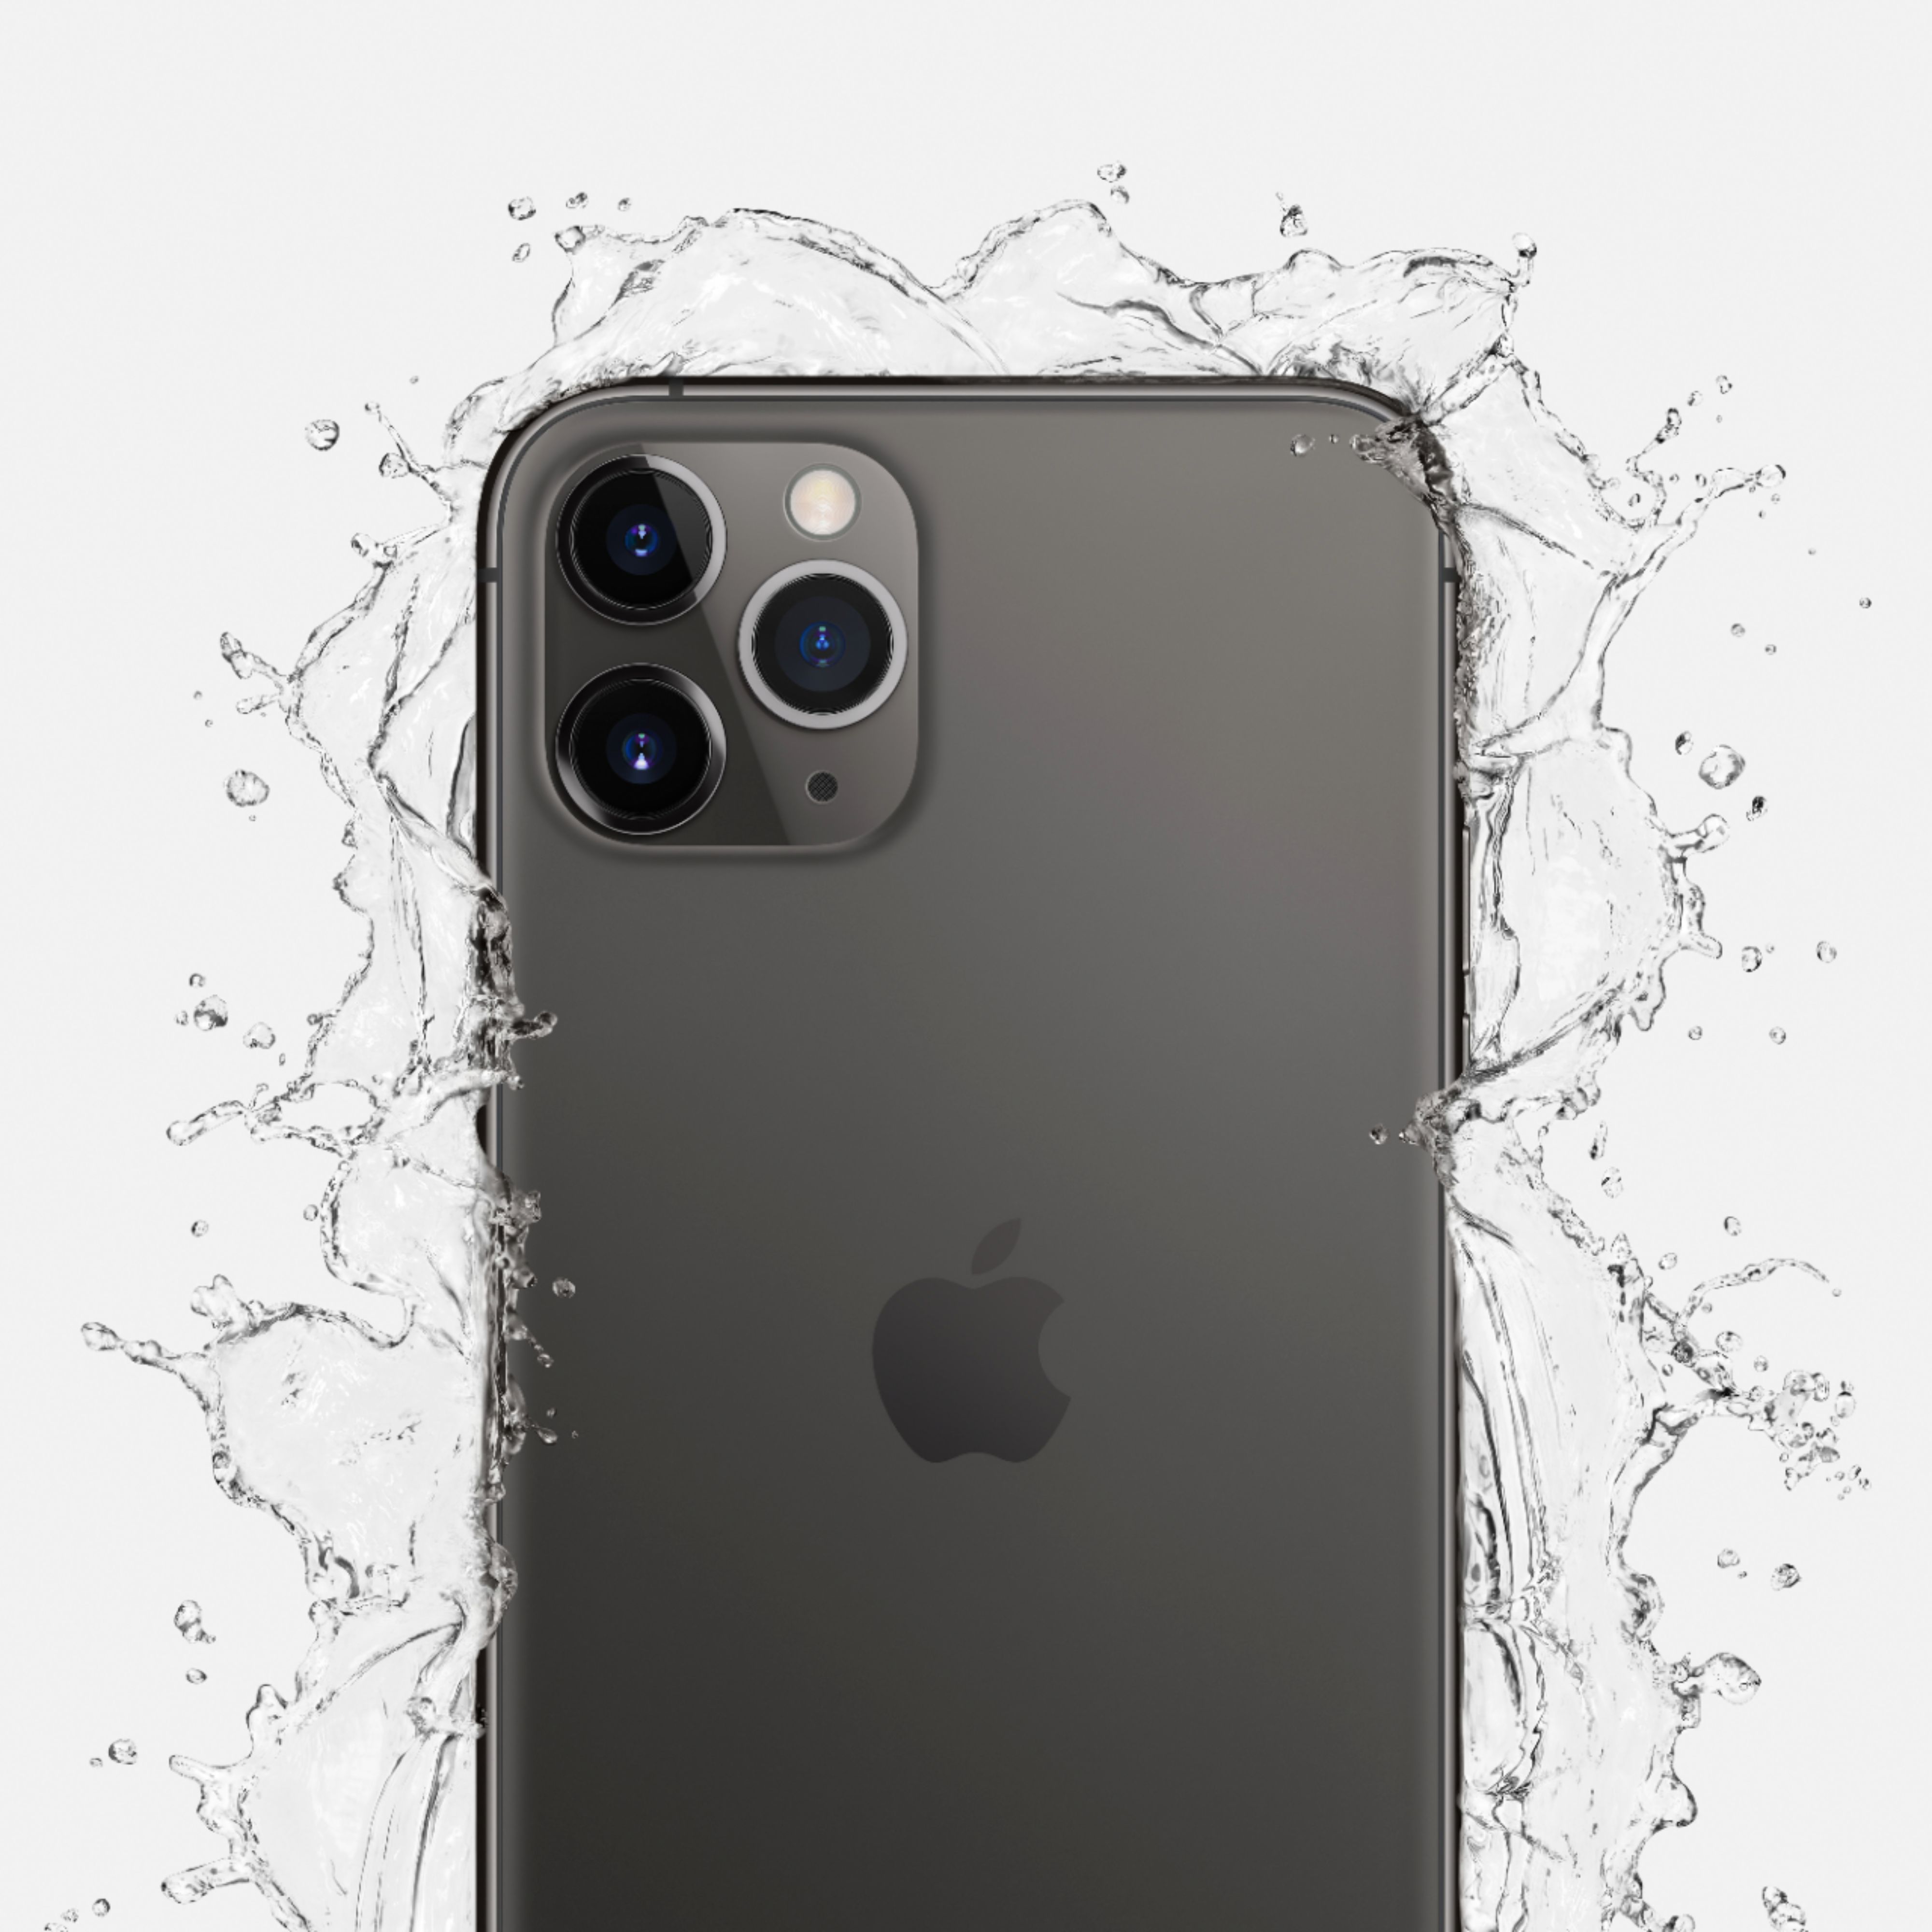 Apple iPhone 11 Pro Max 256GB Space Gray (Verizon) MWH42LL/A 